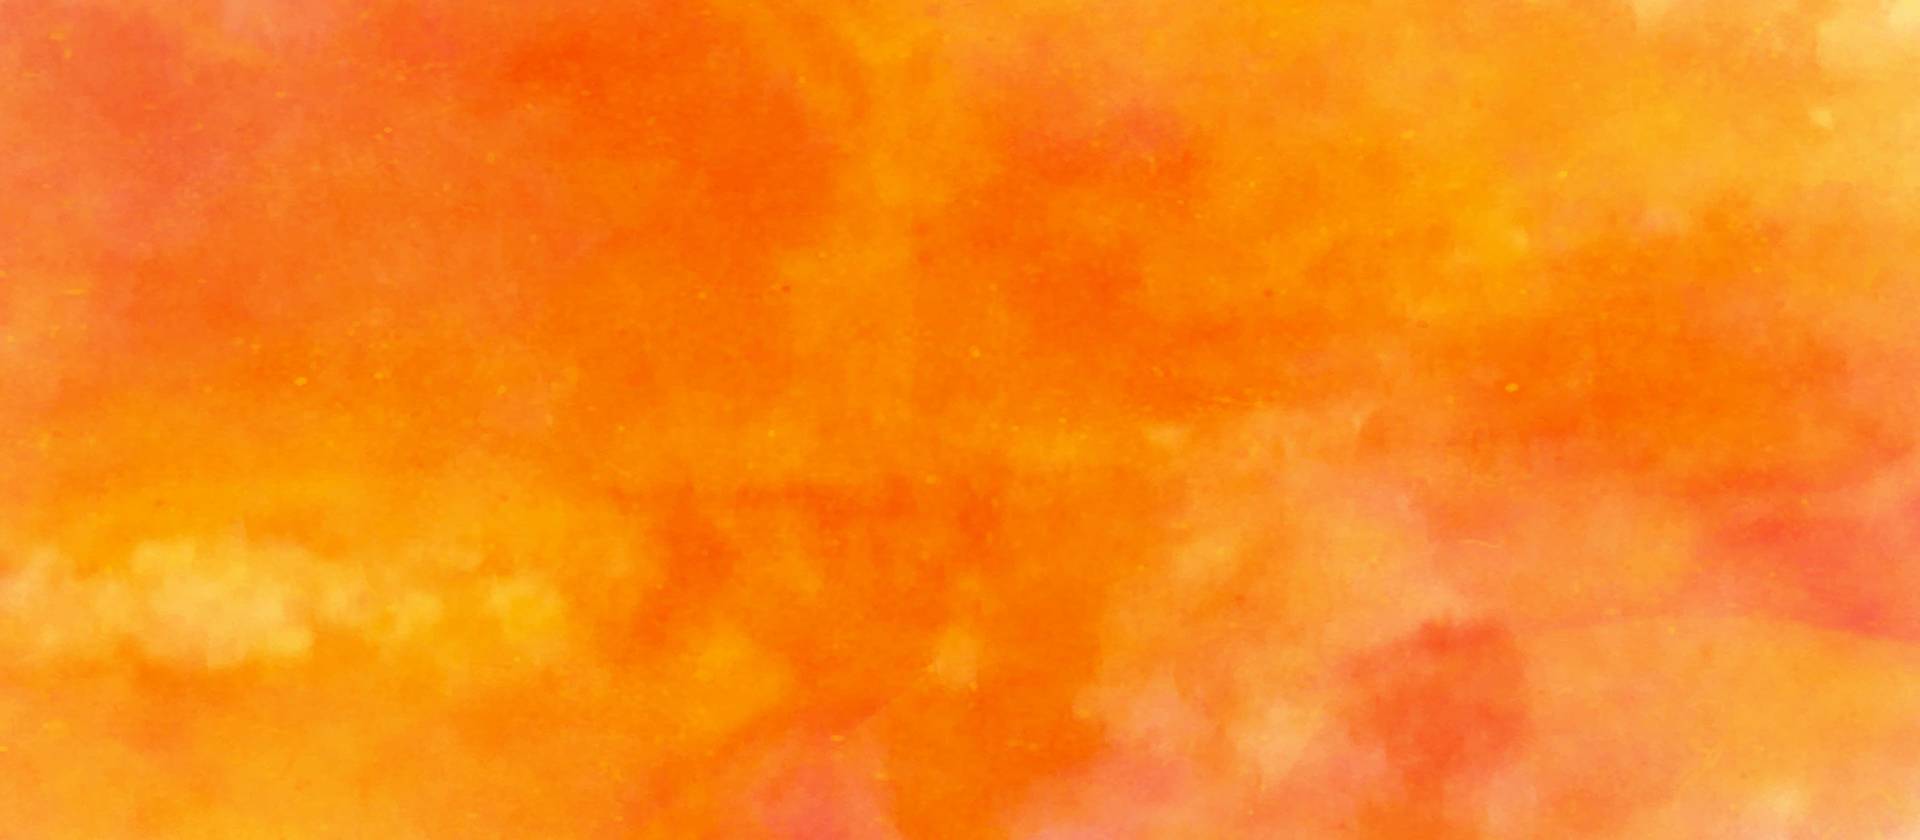 NDTR representation of orange smoke